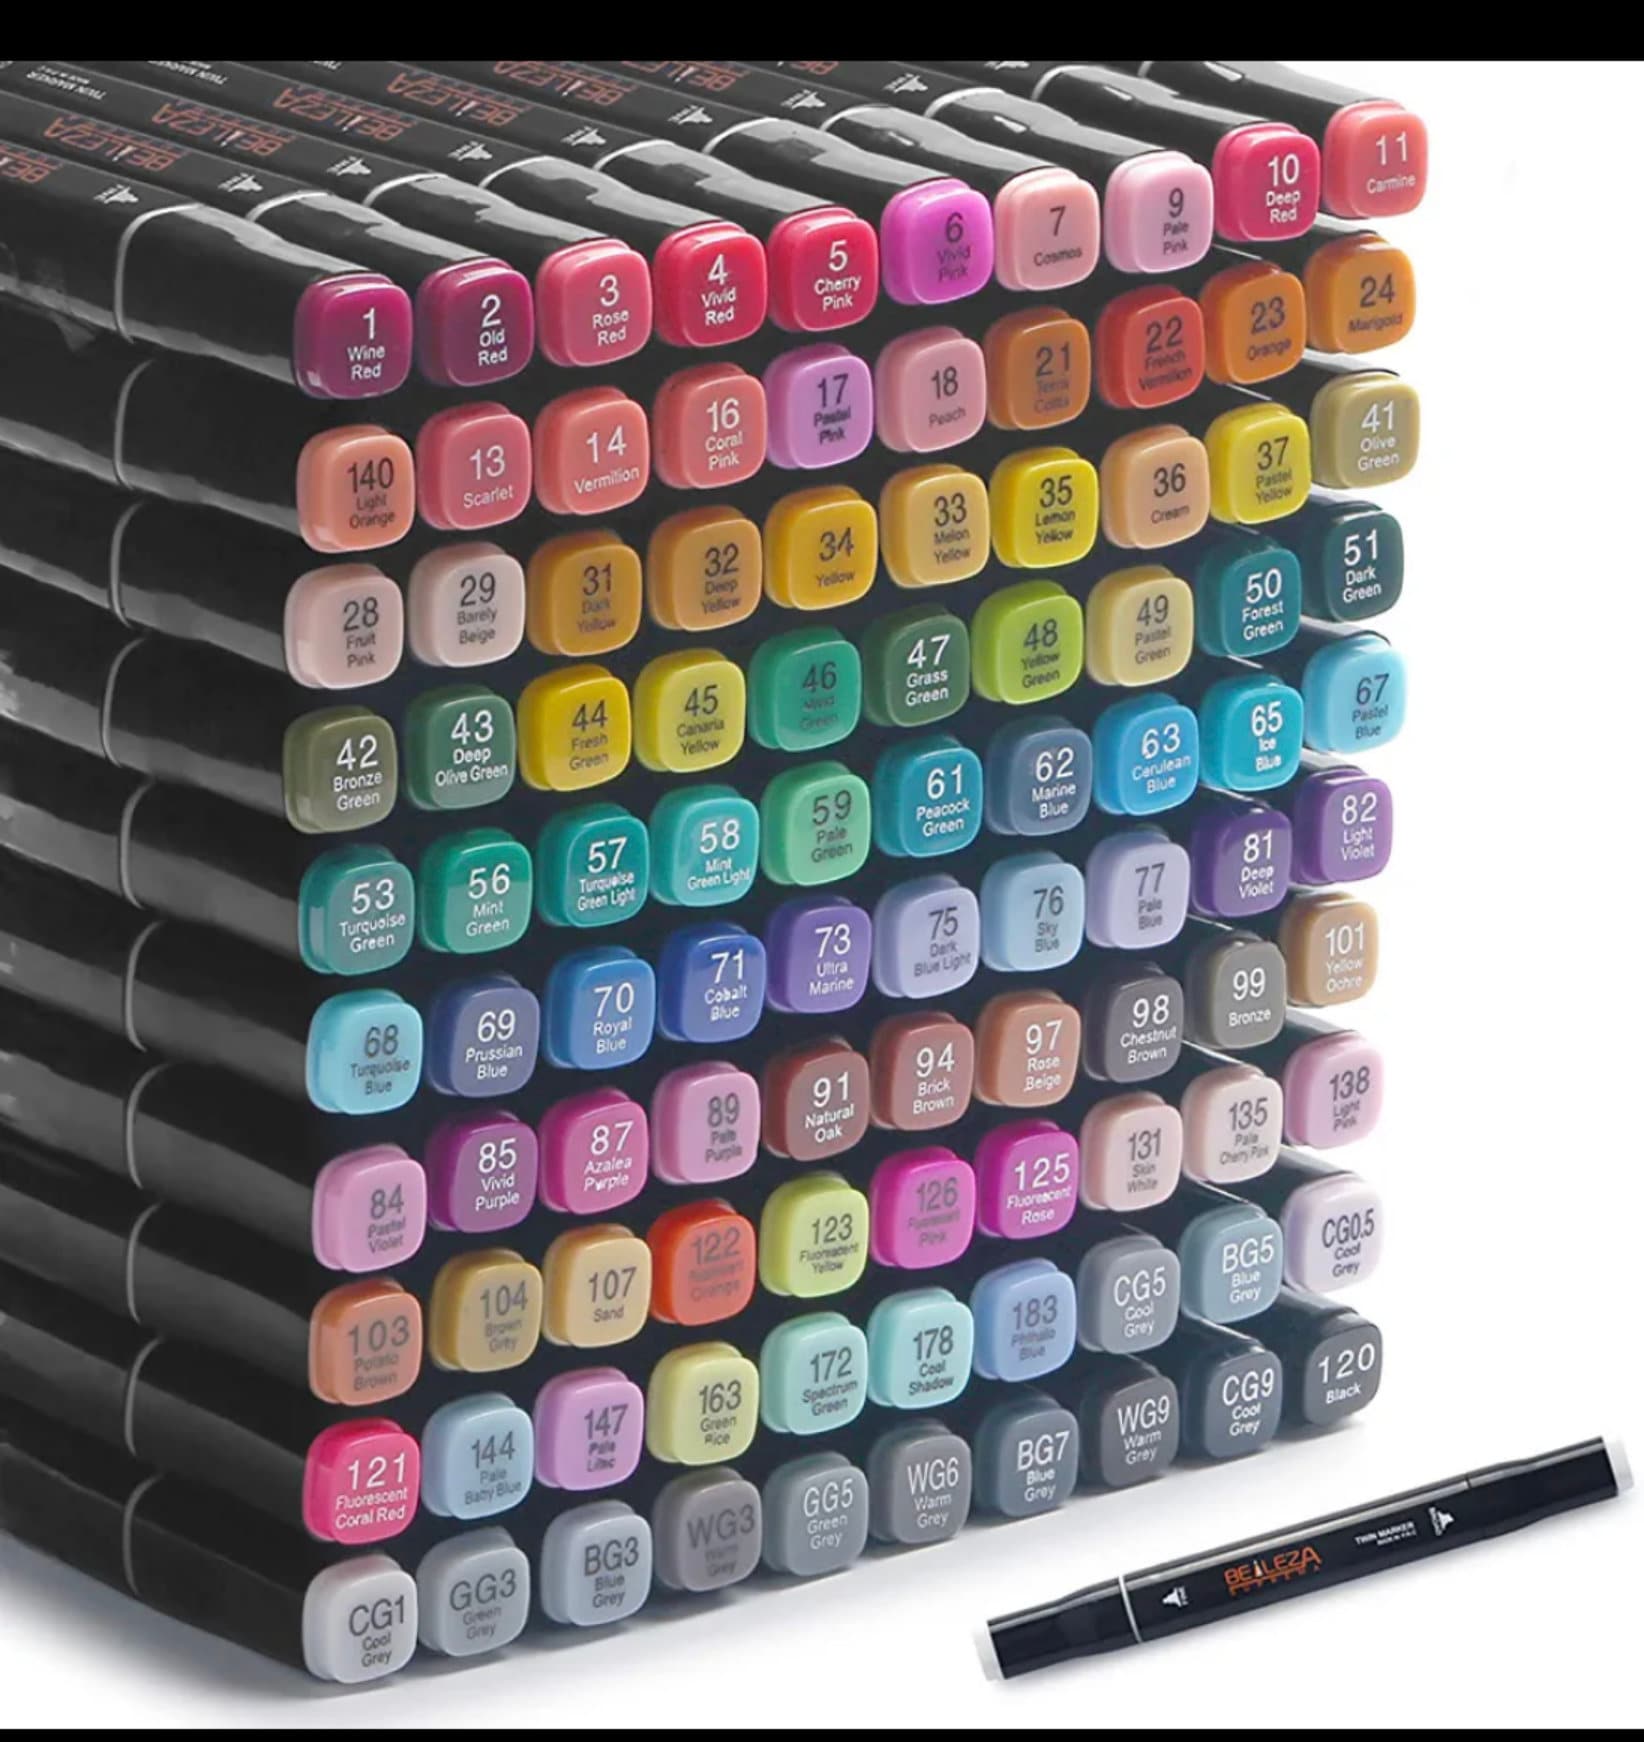 MILO 80 Art Marker Set Dual Tip Artist Markers Bullet Tip and Chisel Tip  Alcohol Based Coloring Markers Includes Marker Storage Box 